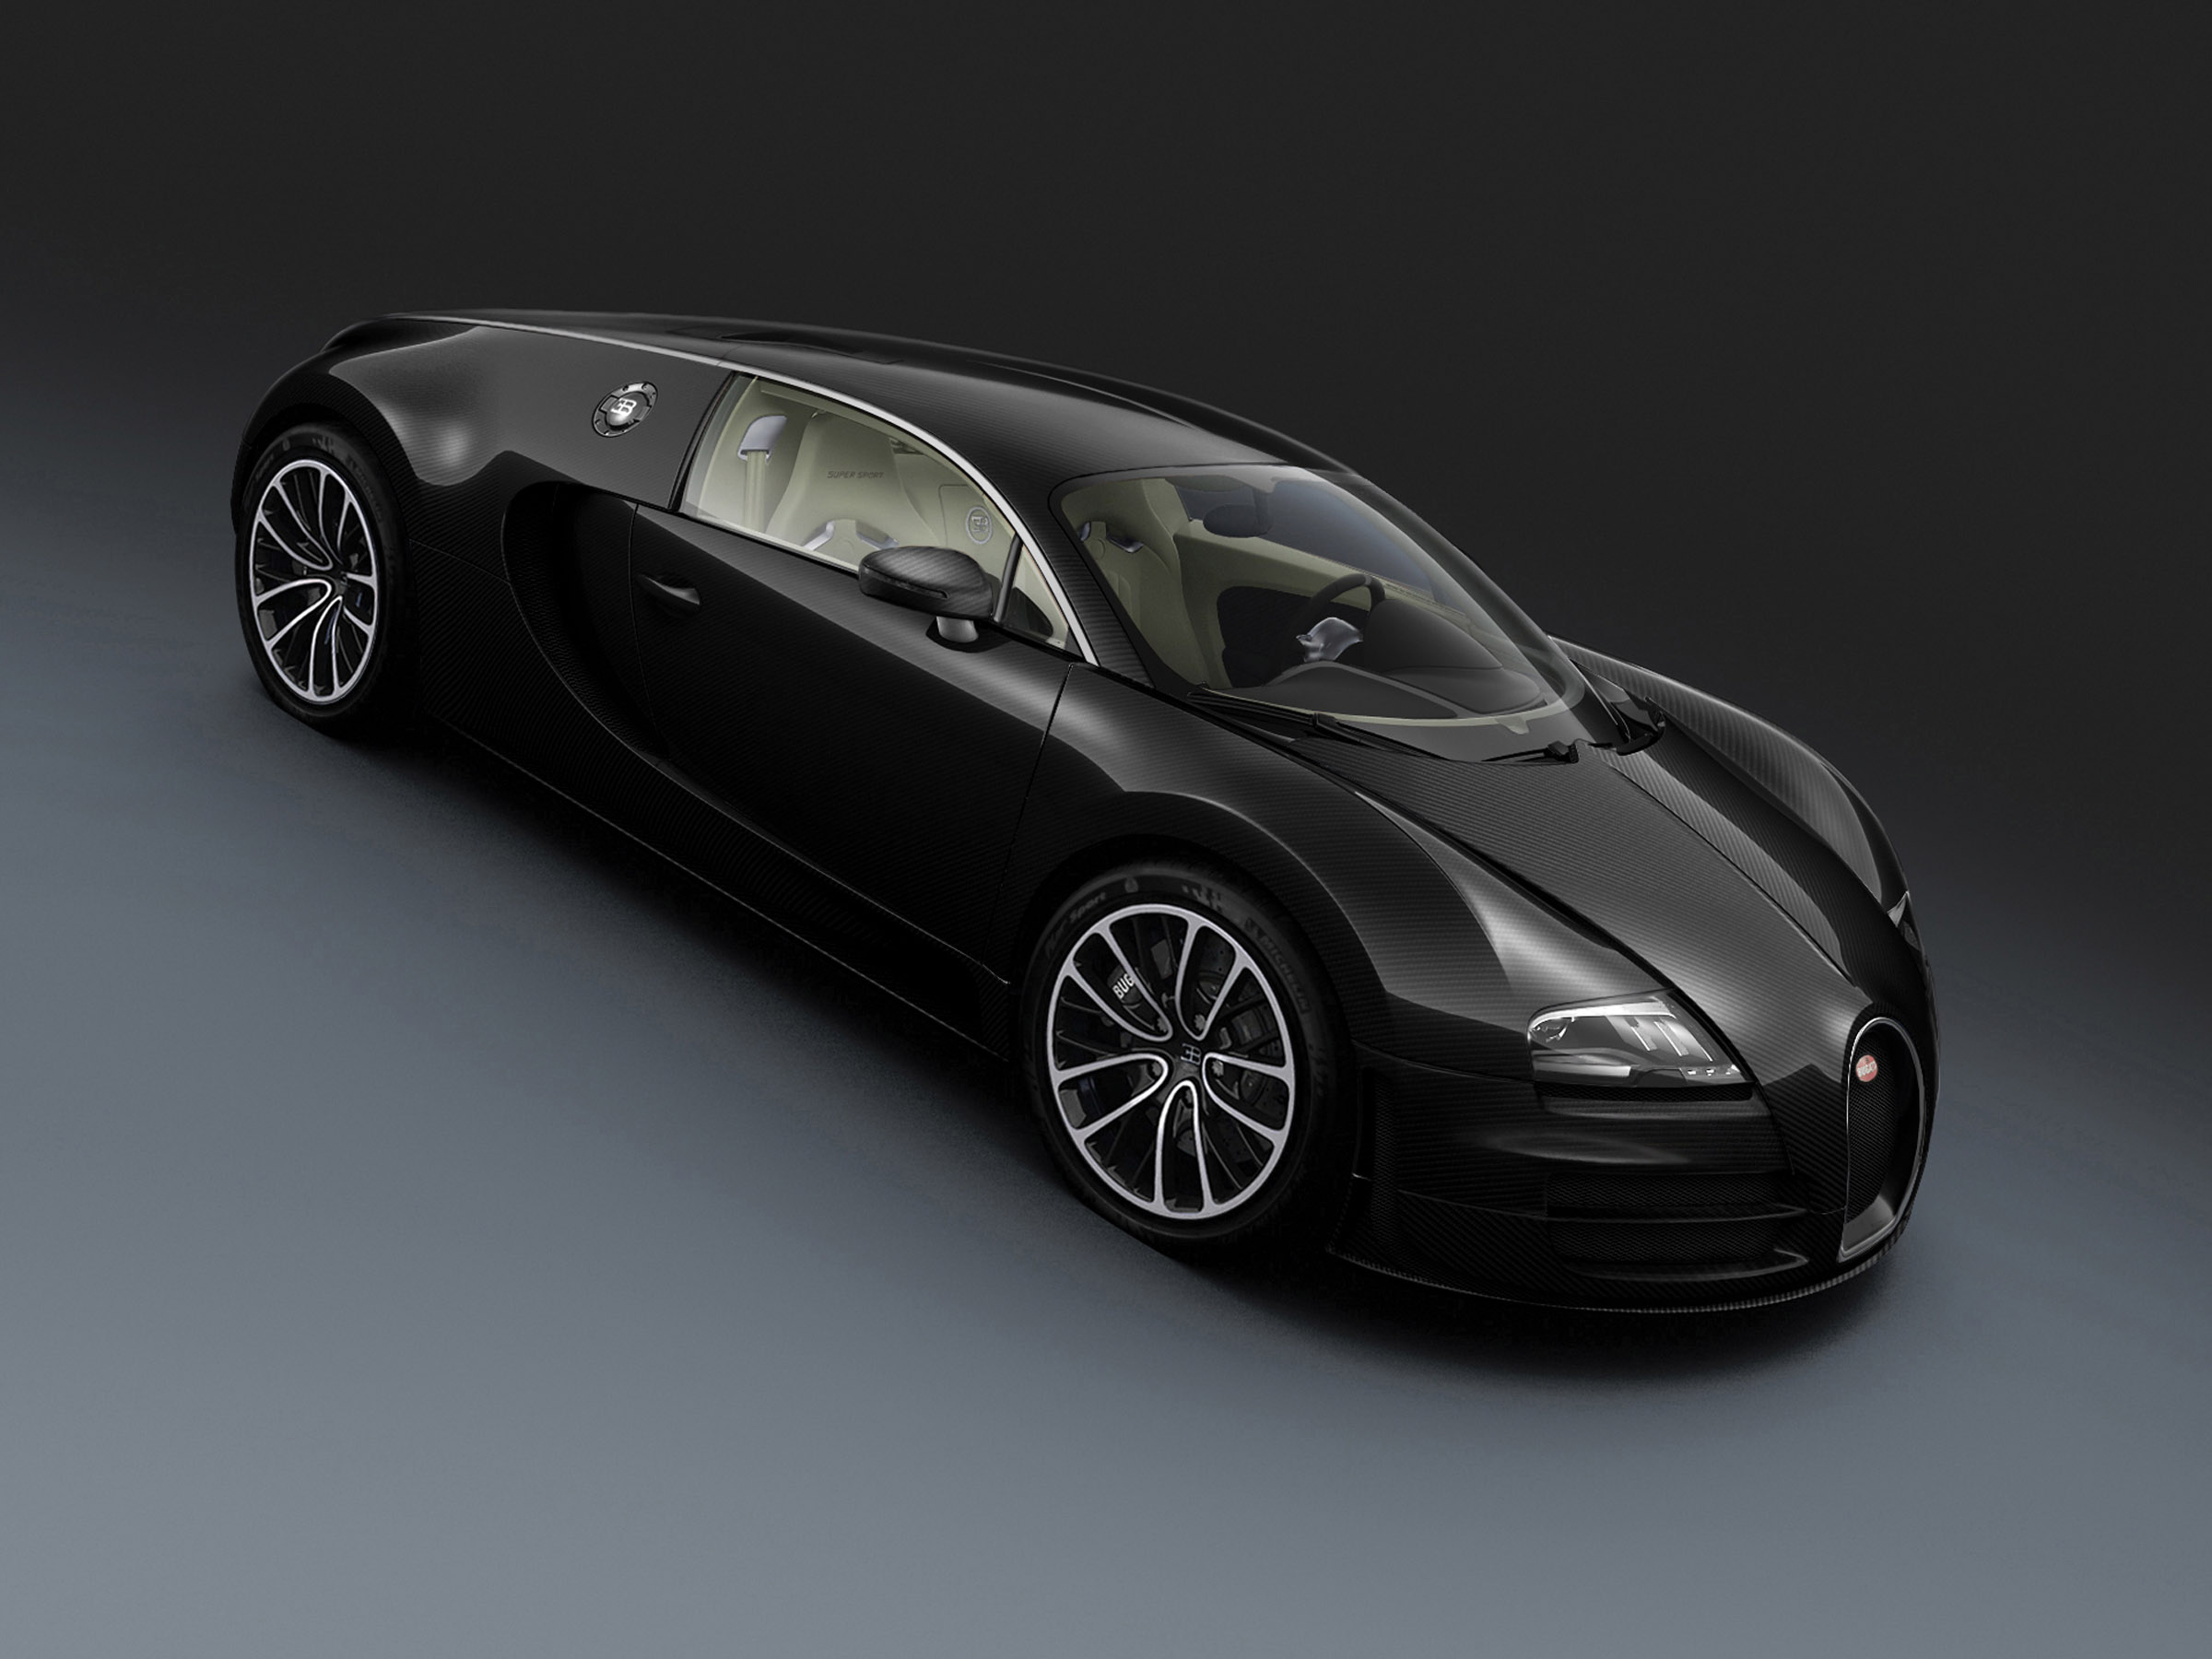 Bugatti Veyron 16.4 Super Sport Shanghai